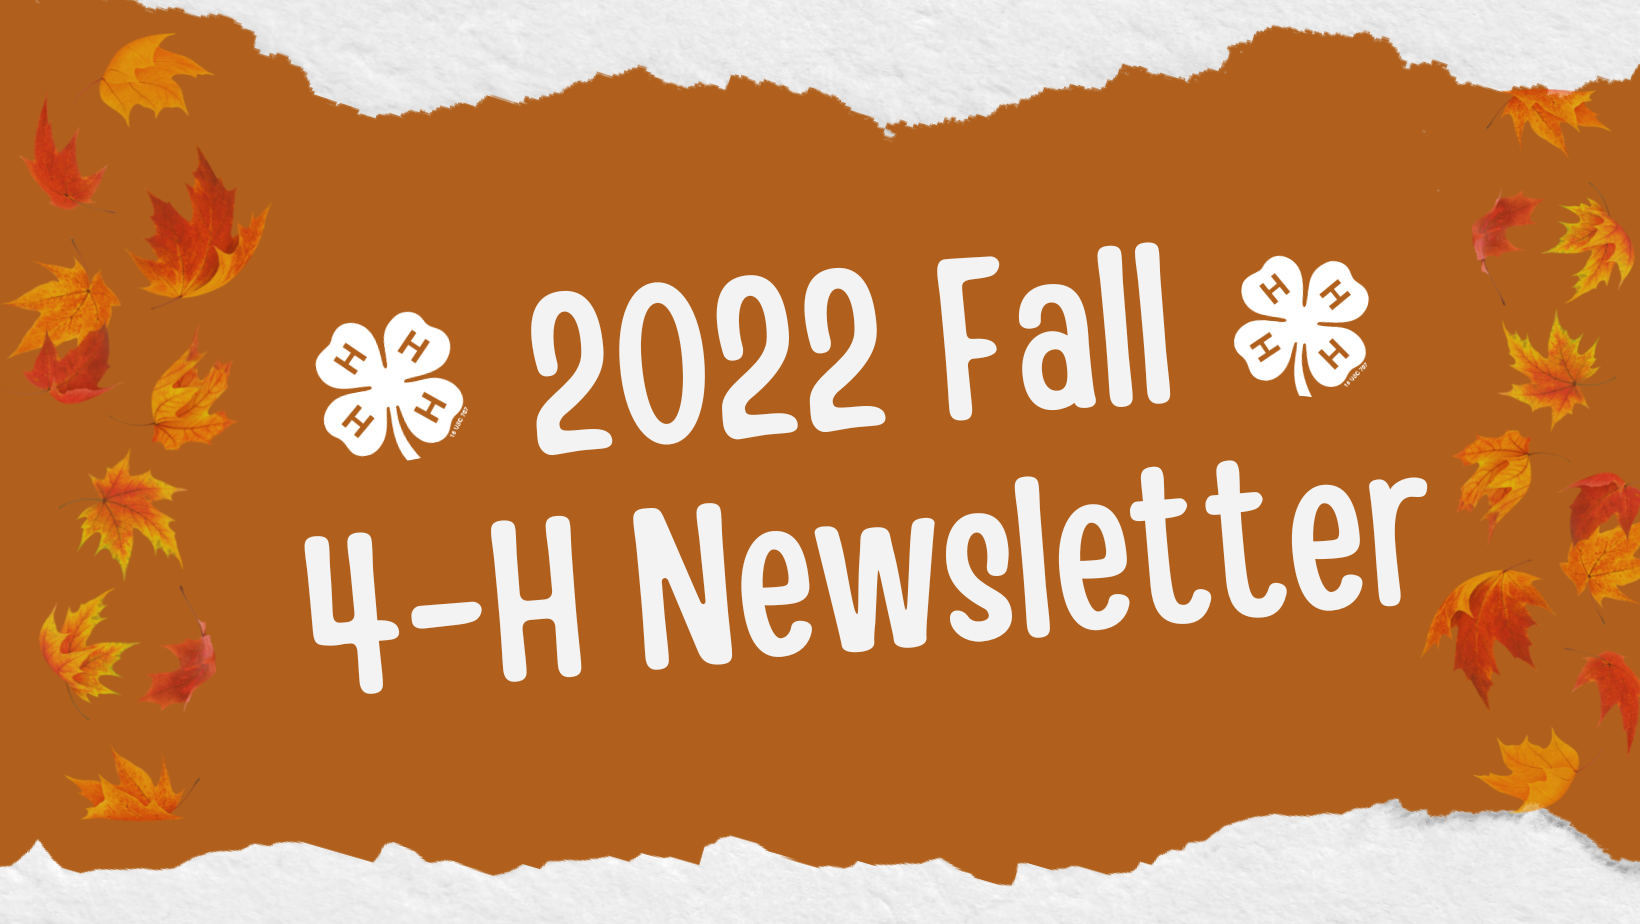 Fall 4-H Newsletter